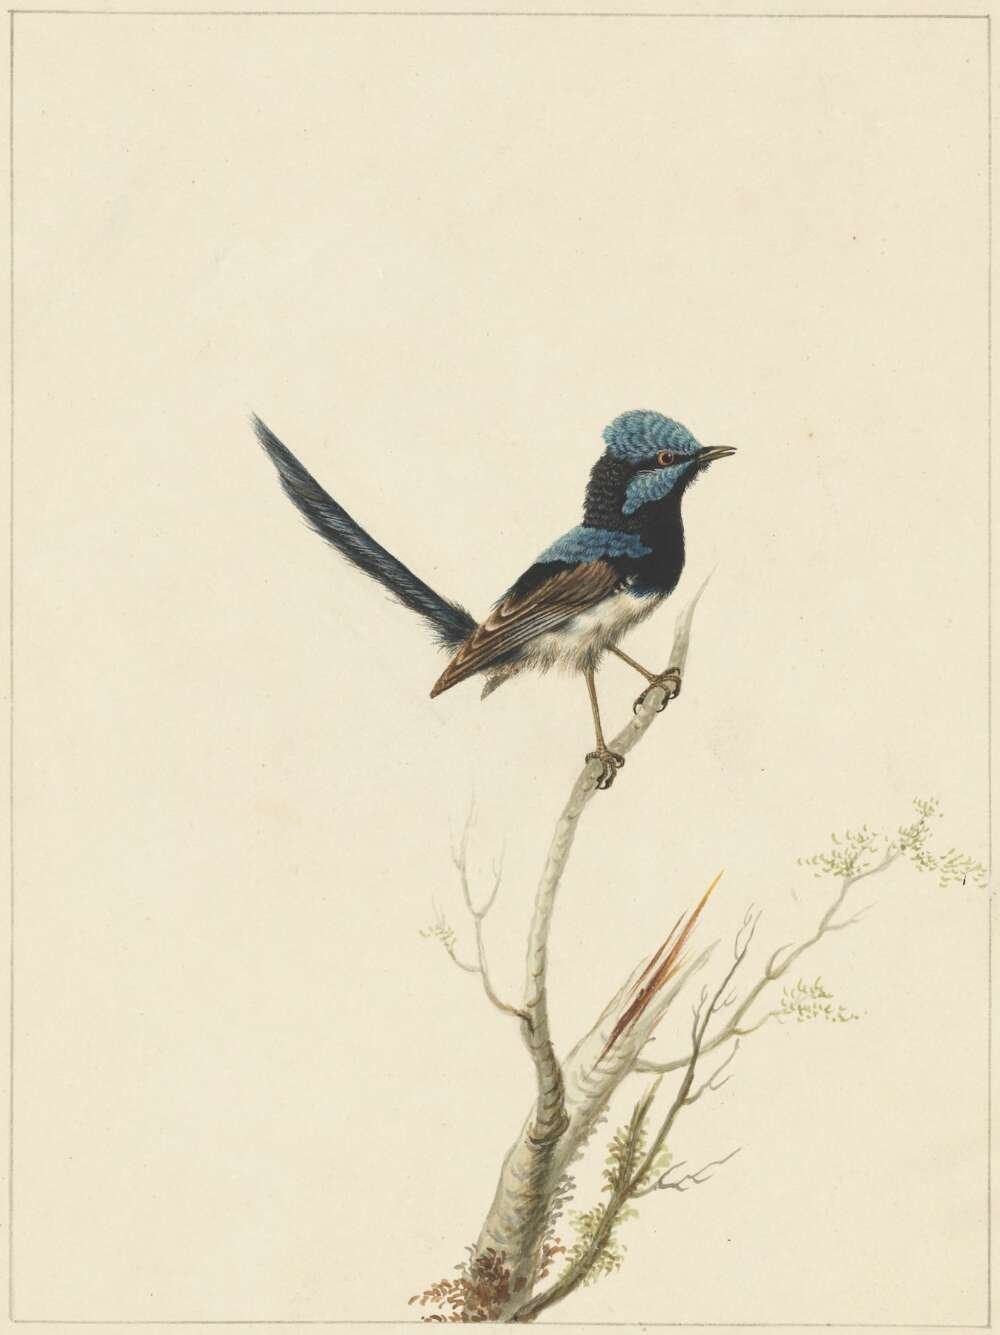 Sarah Stone, Superb warbler [1790]